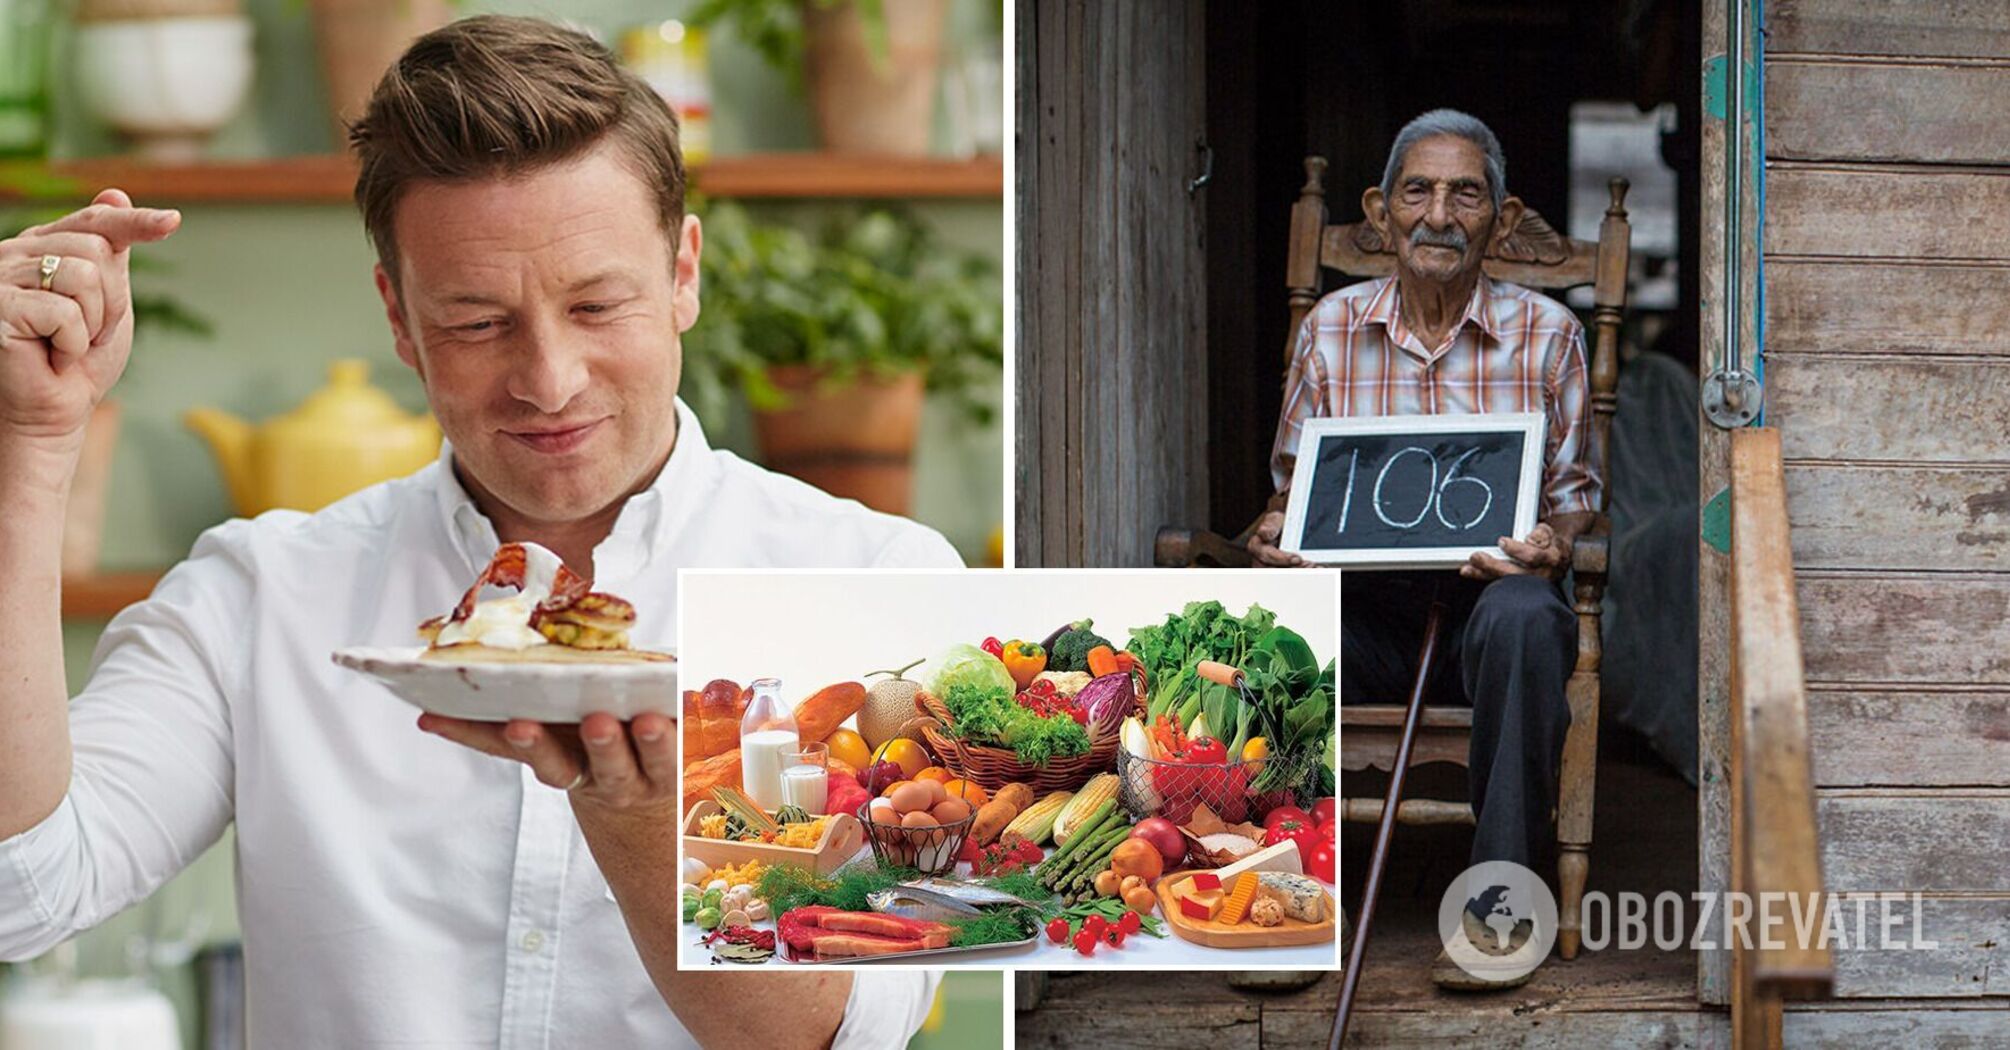 Jamie Oliver named 14 foods that promote longevity